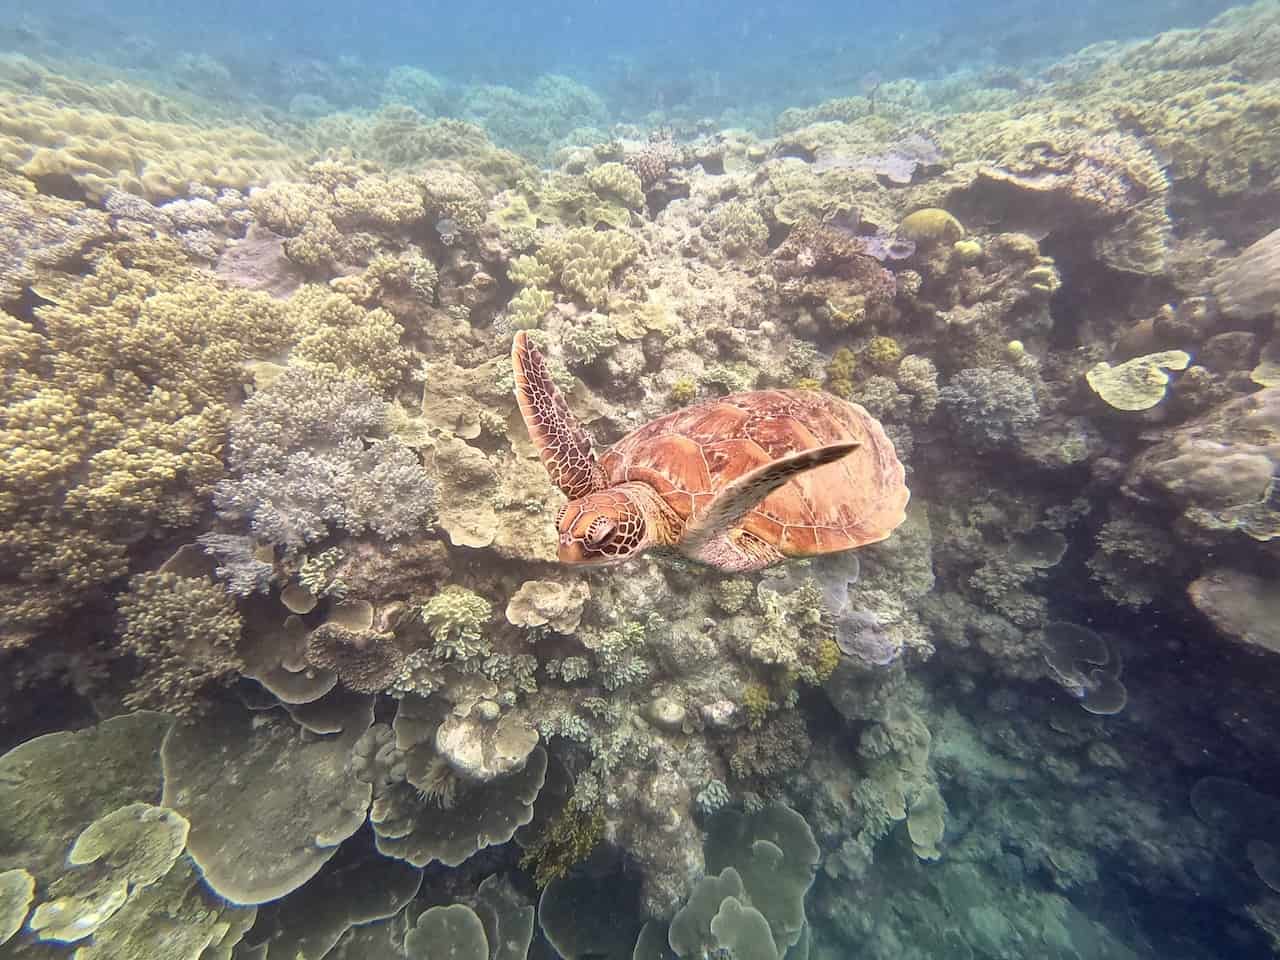 Great Barrier Reef Turtle